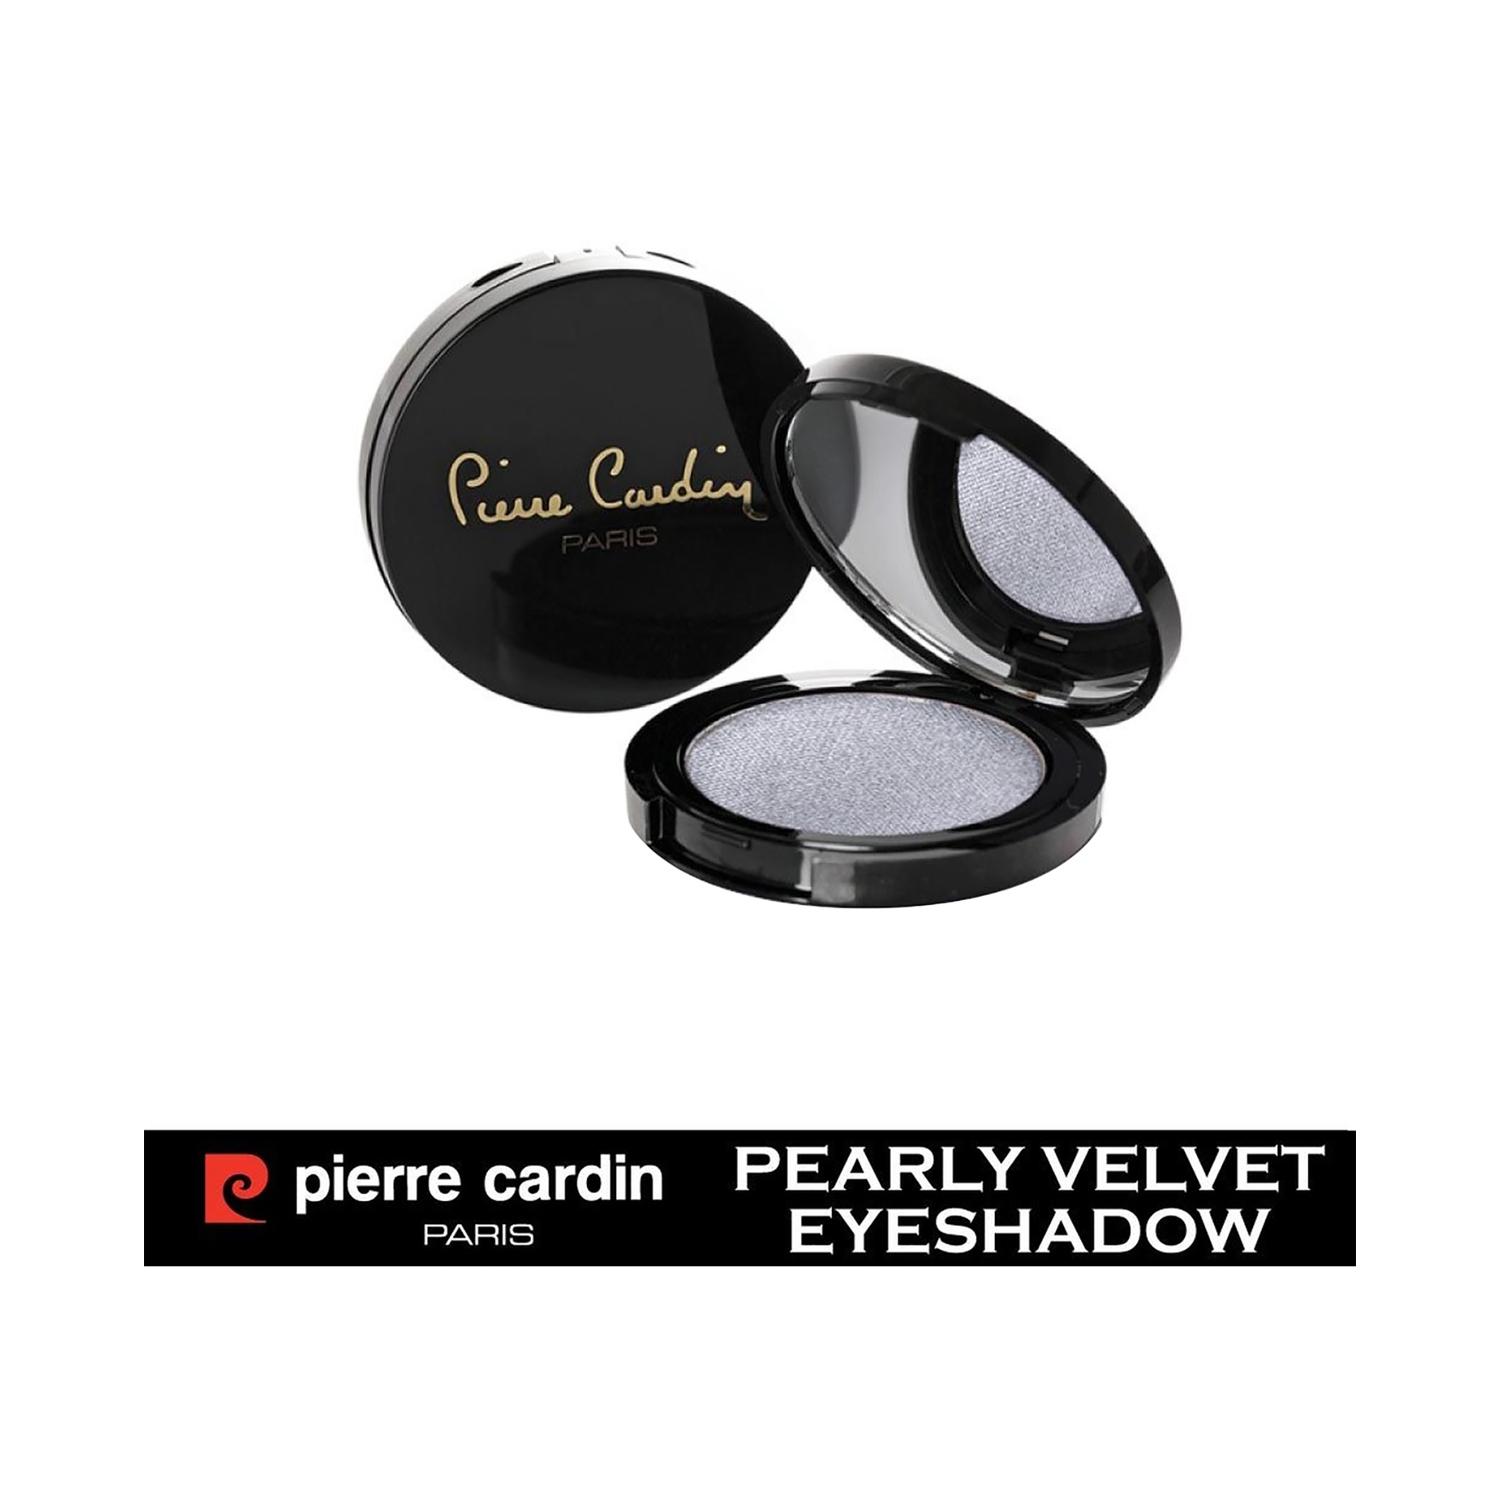 pierre cardin paris pearly velvet eye shadow - 975 dark grey (4g)